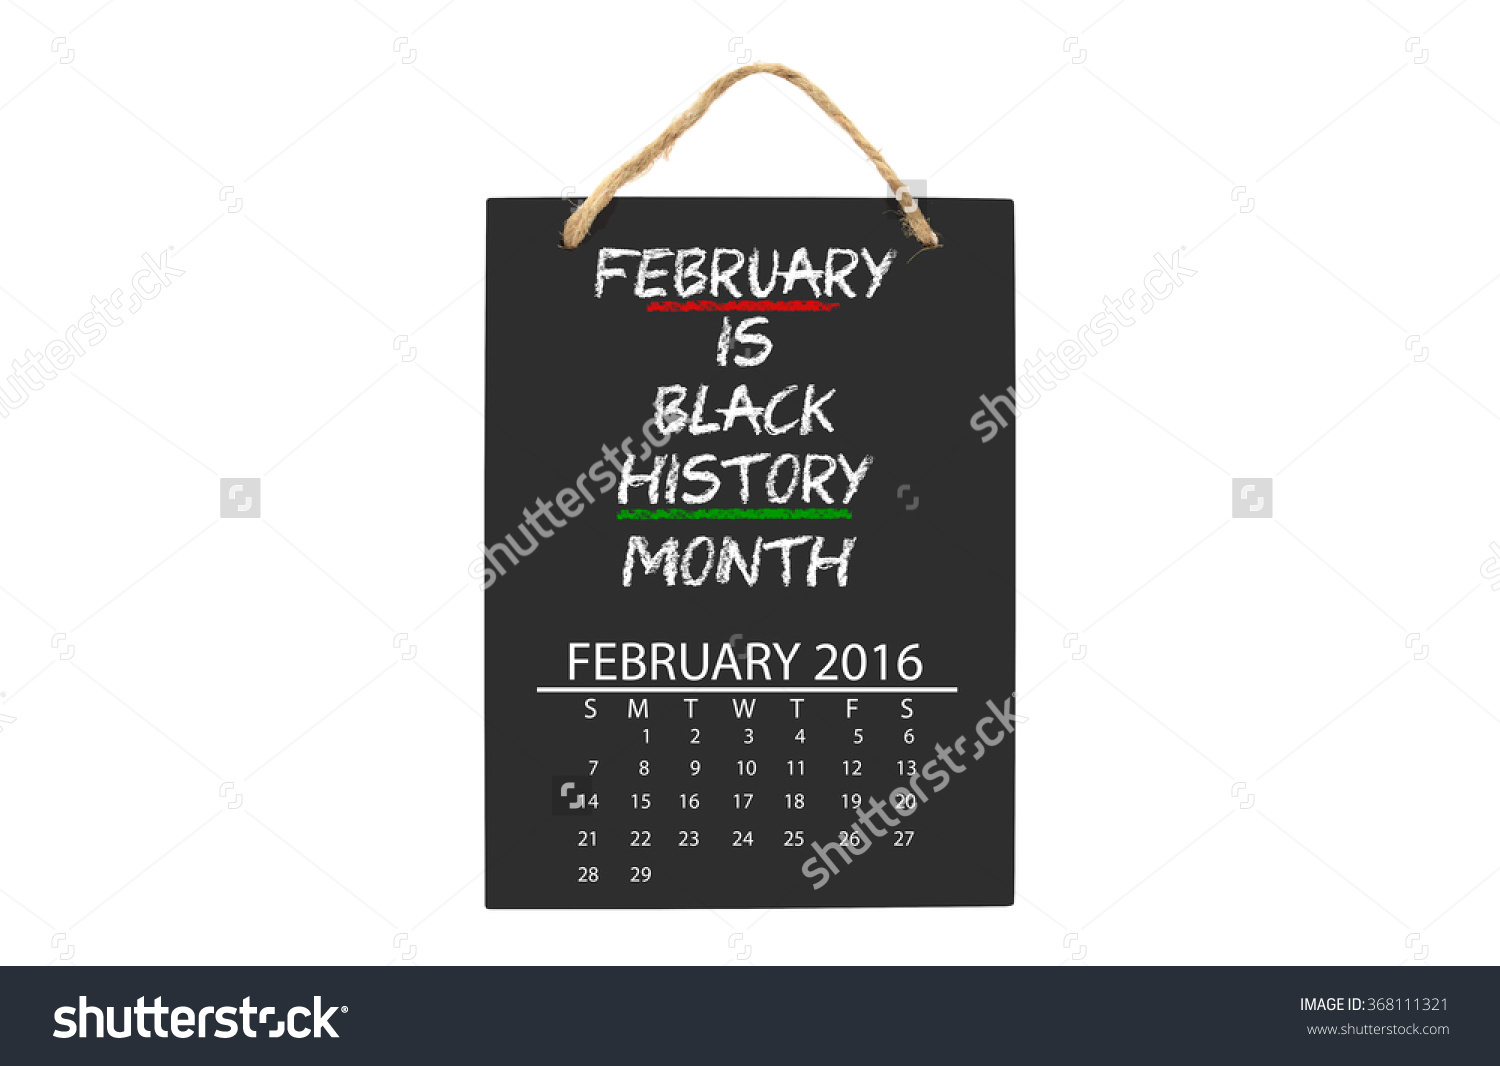 Black History Month February 2016 Calendar on Blackboard isolated on